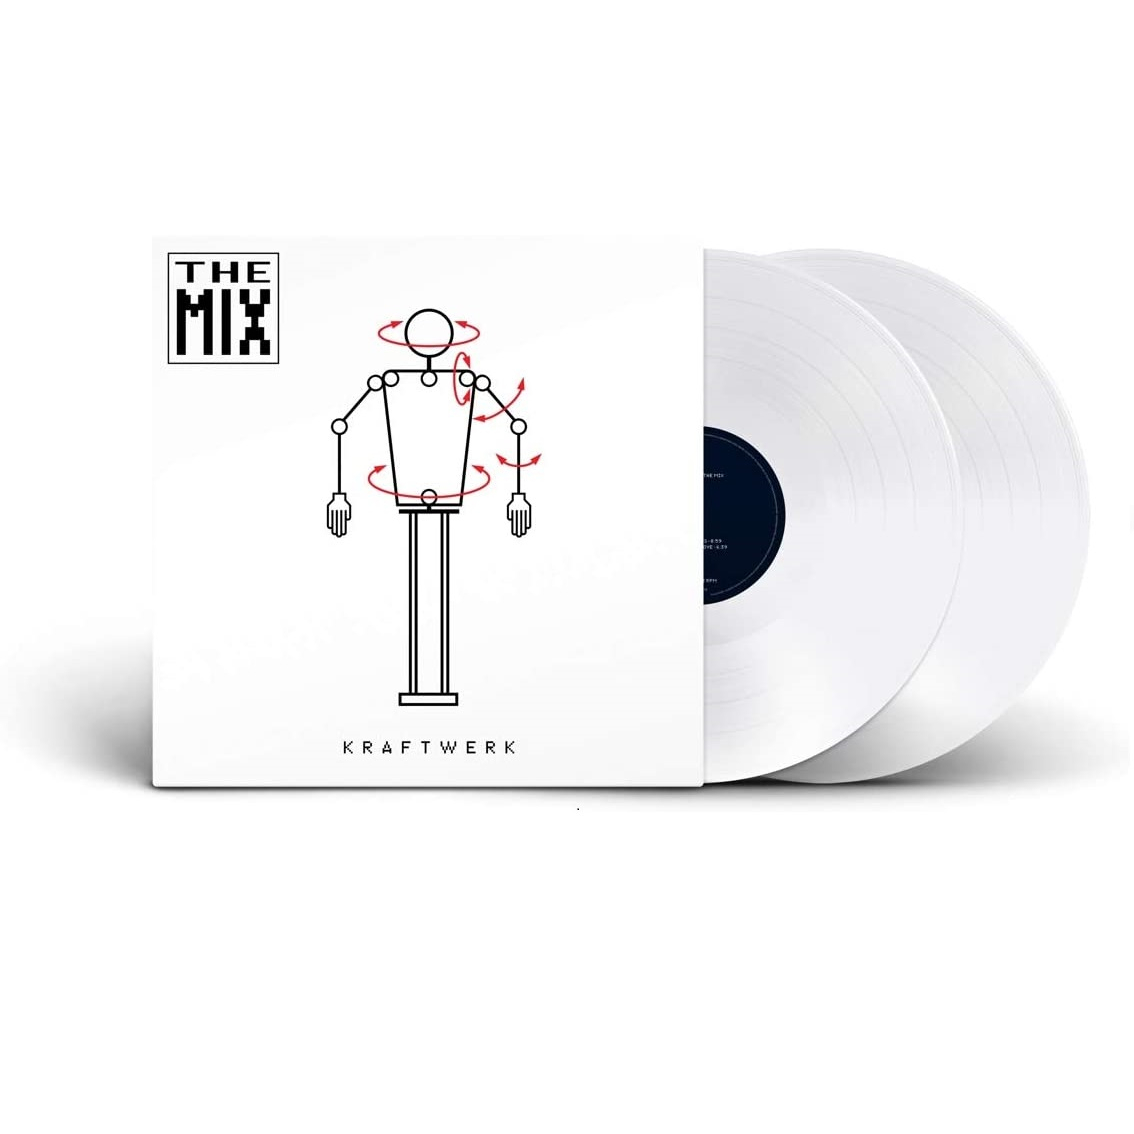 THE MIX (2019 REMASTER) - 2 LP 180 GR. COLORED WHITE VINYL + BOOKLET LTD.ED.